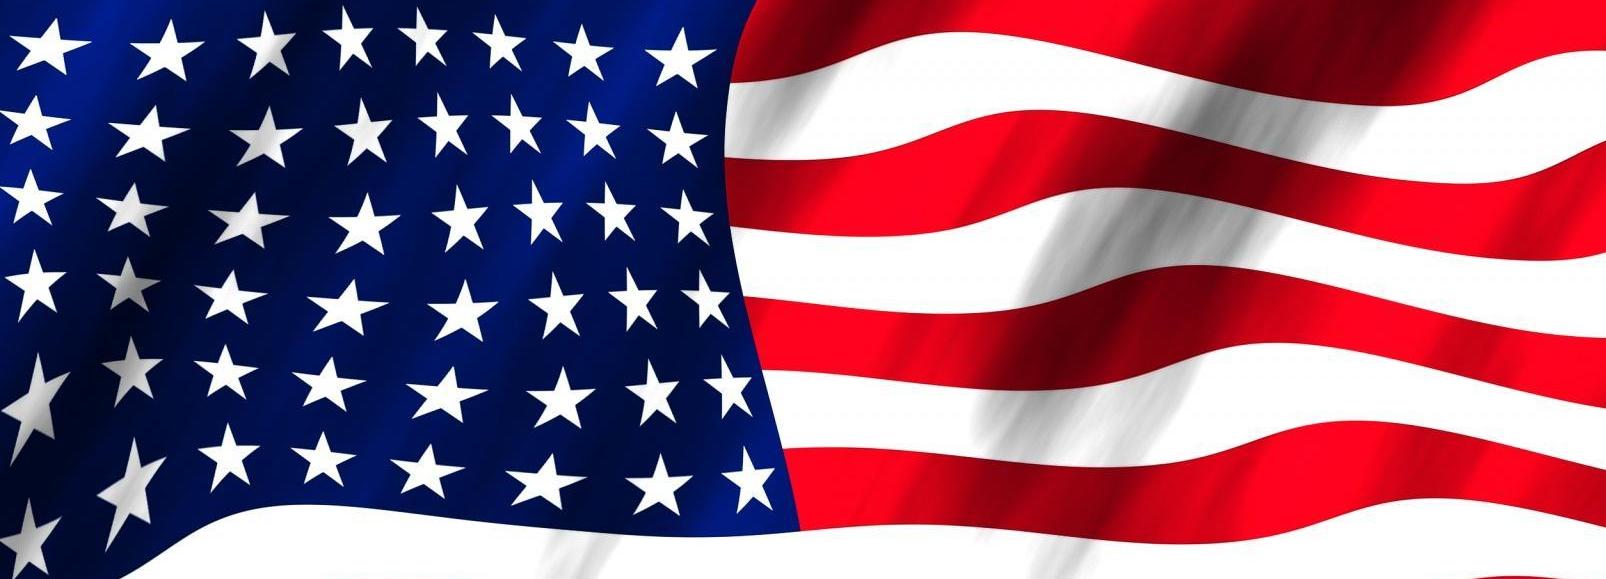 american-flag-1459201553ppe - Copy - Copy - Copy (3)